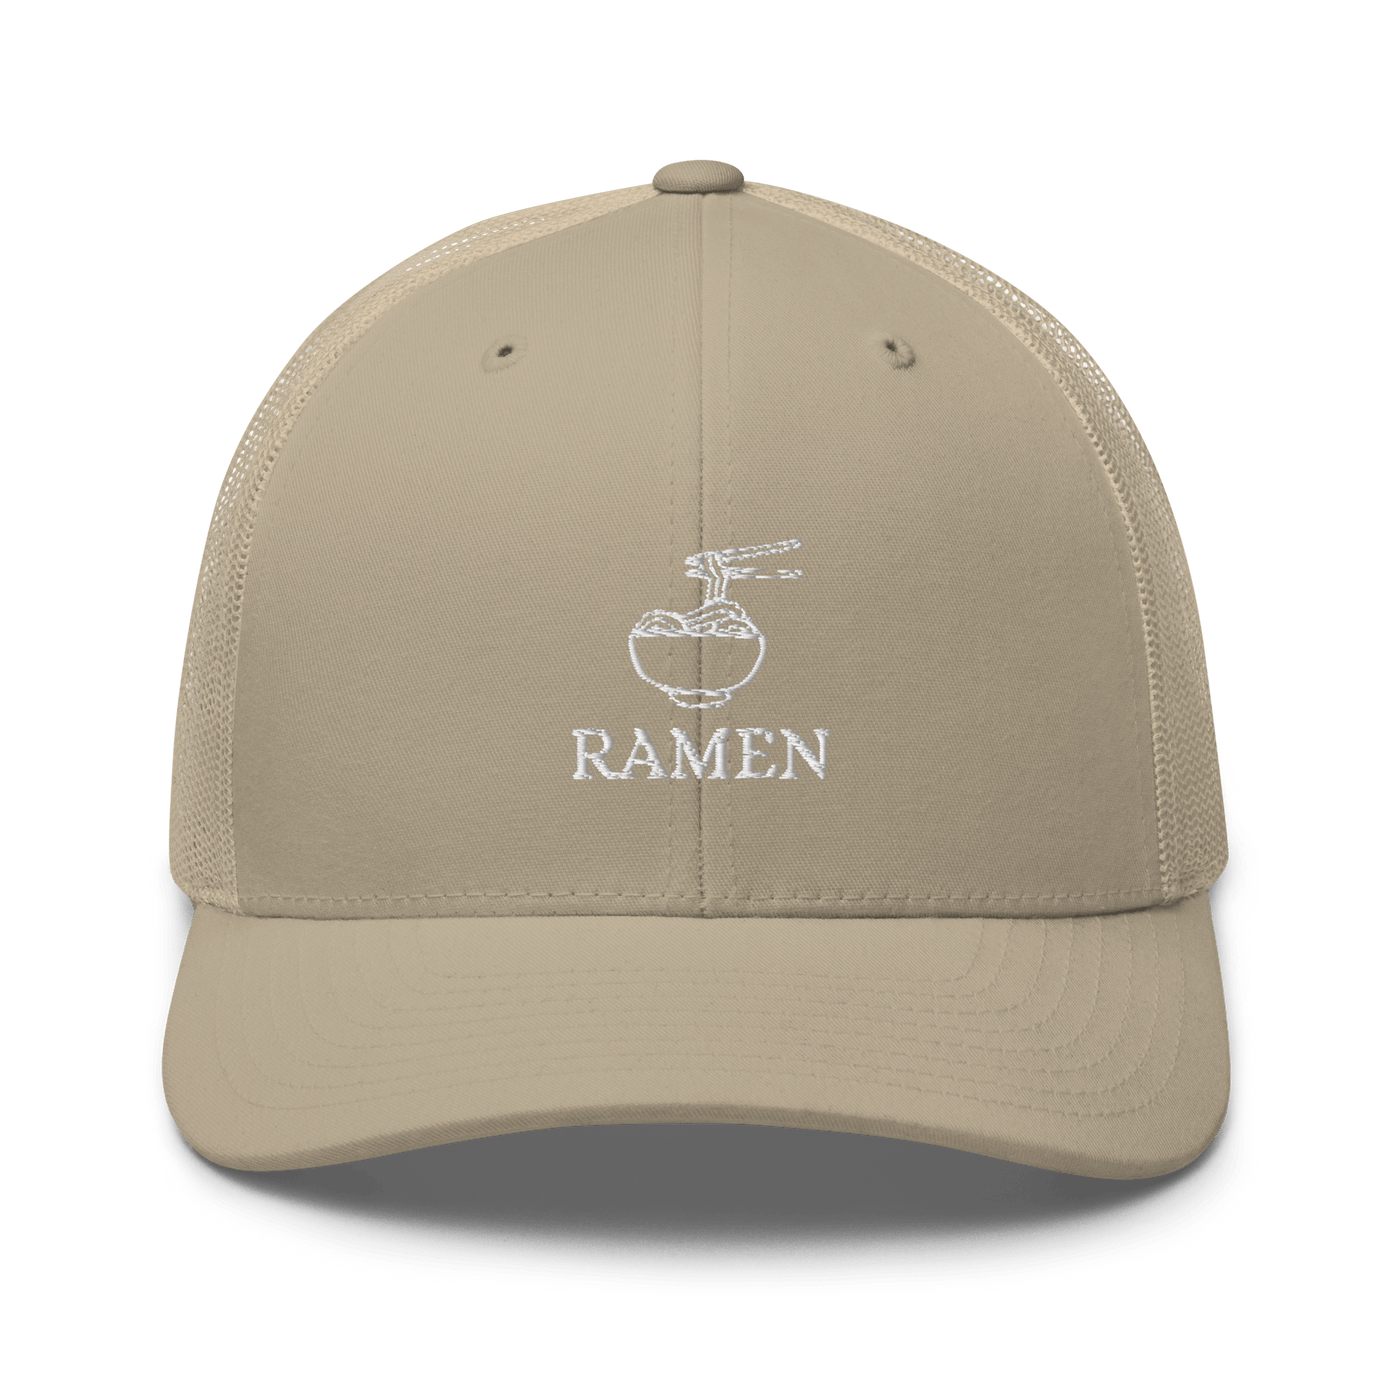 Ramen Bowl Trucker Cap - Khaki - - Just Another Cap Store